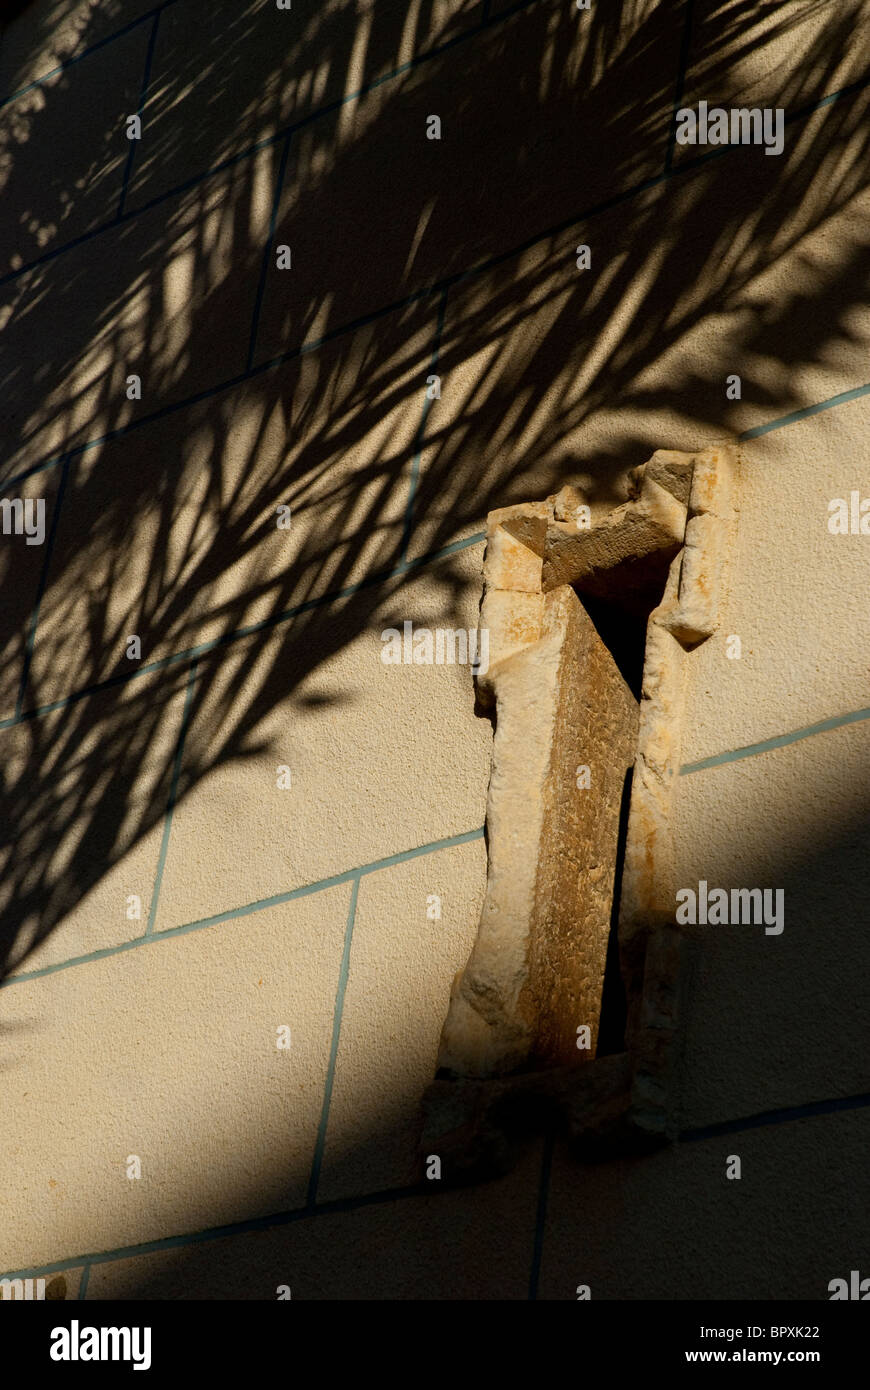 shadows of palm tress falling on a Spanish church wall Stock Photo